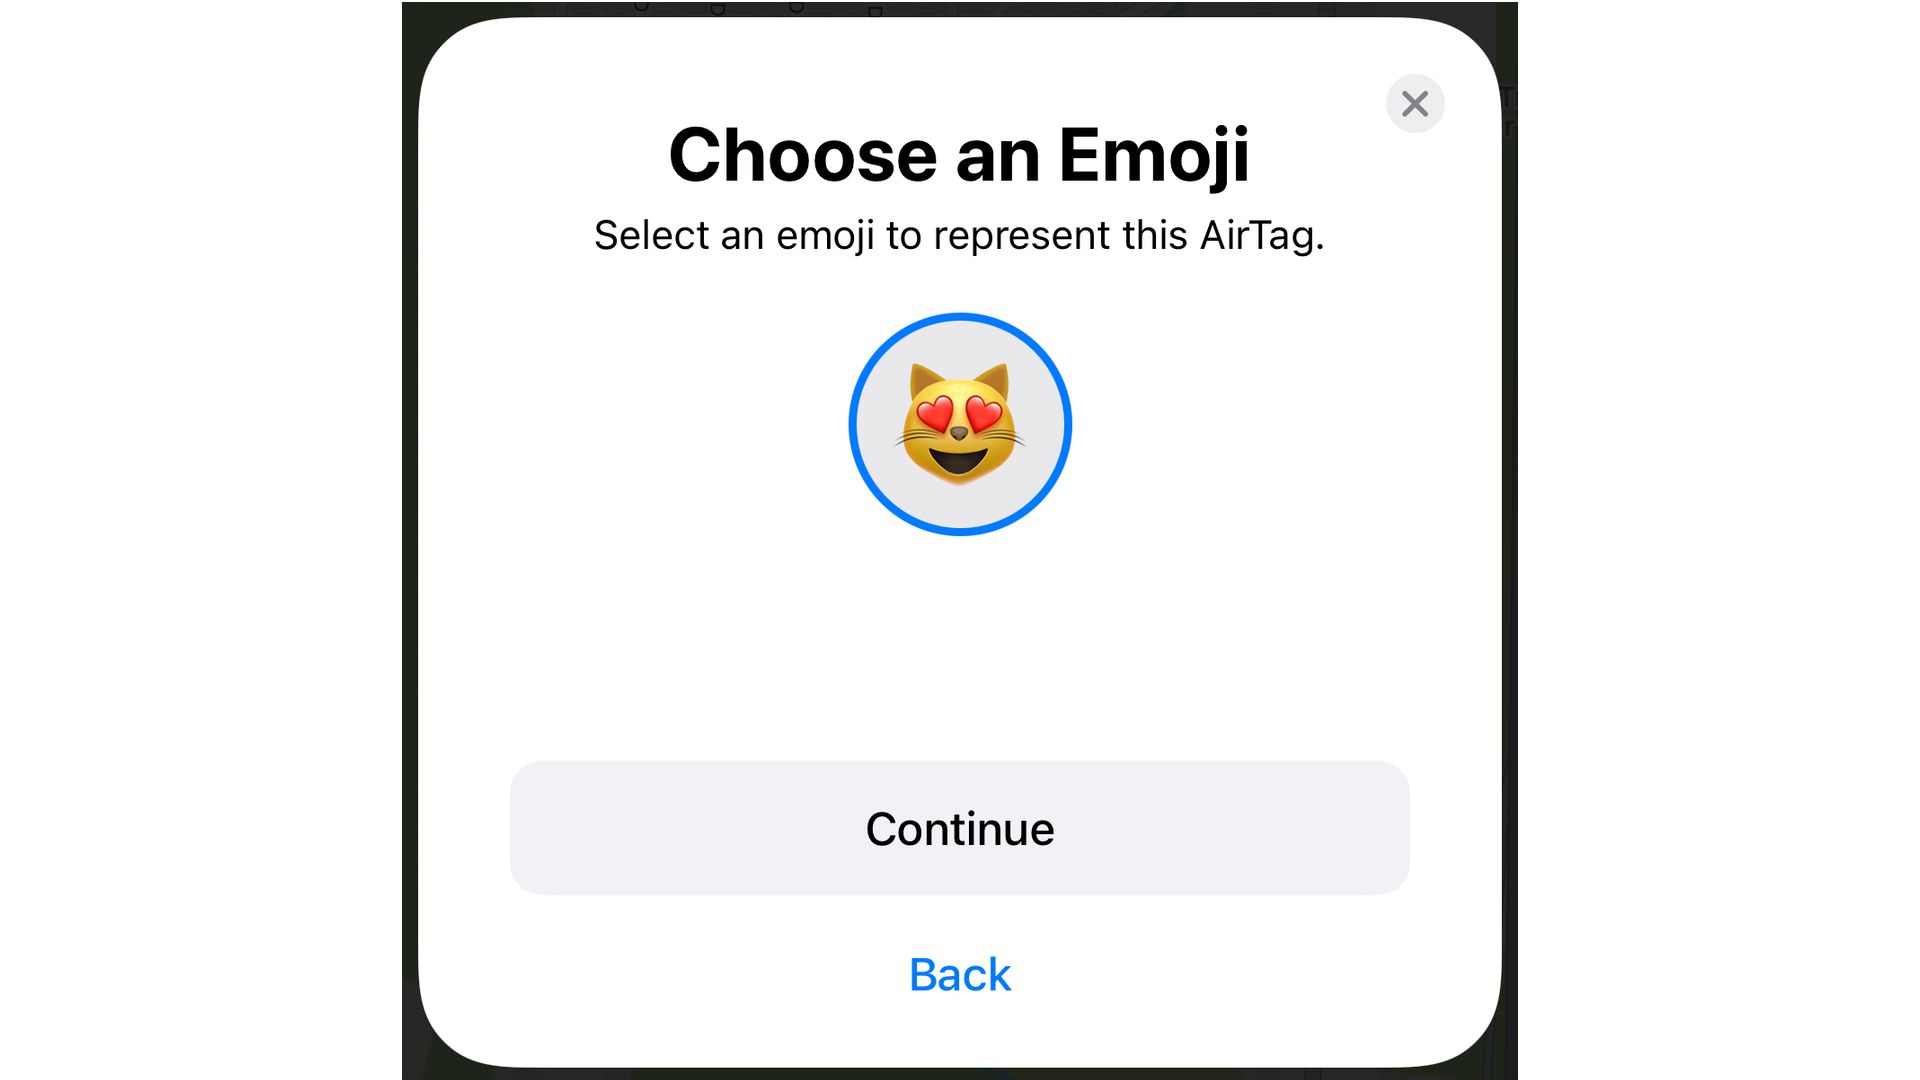 The custom emoji option in the AirTag setup wizard.